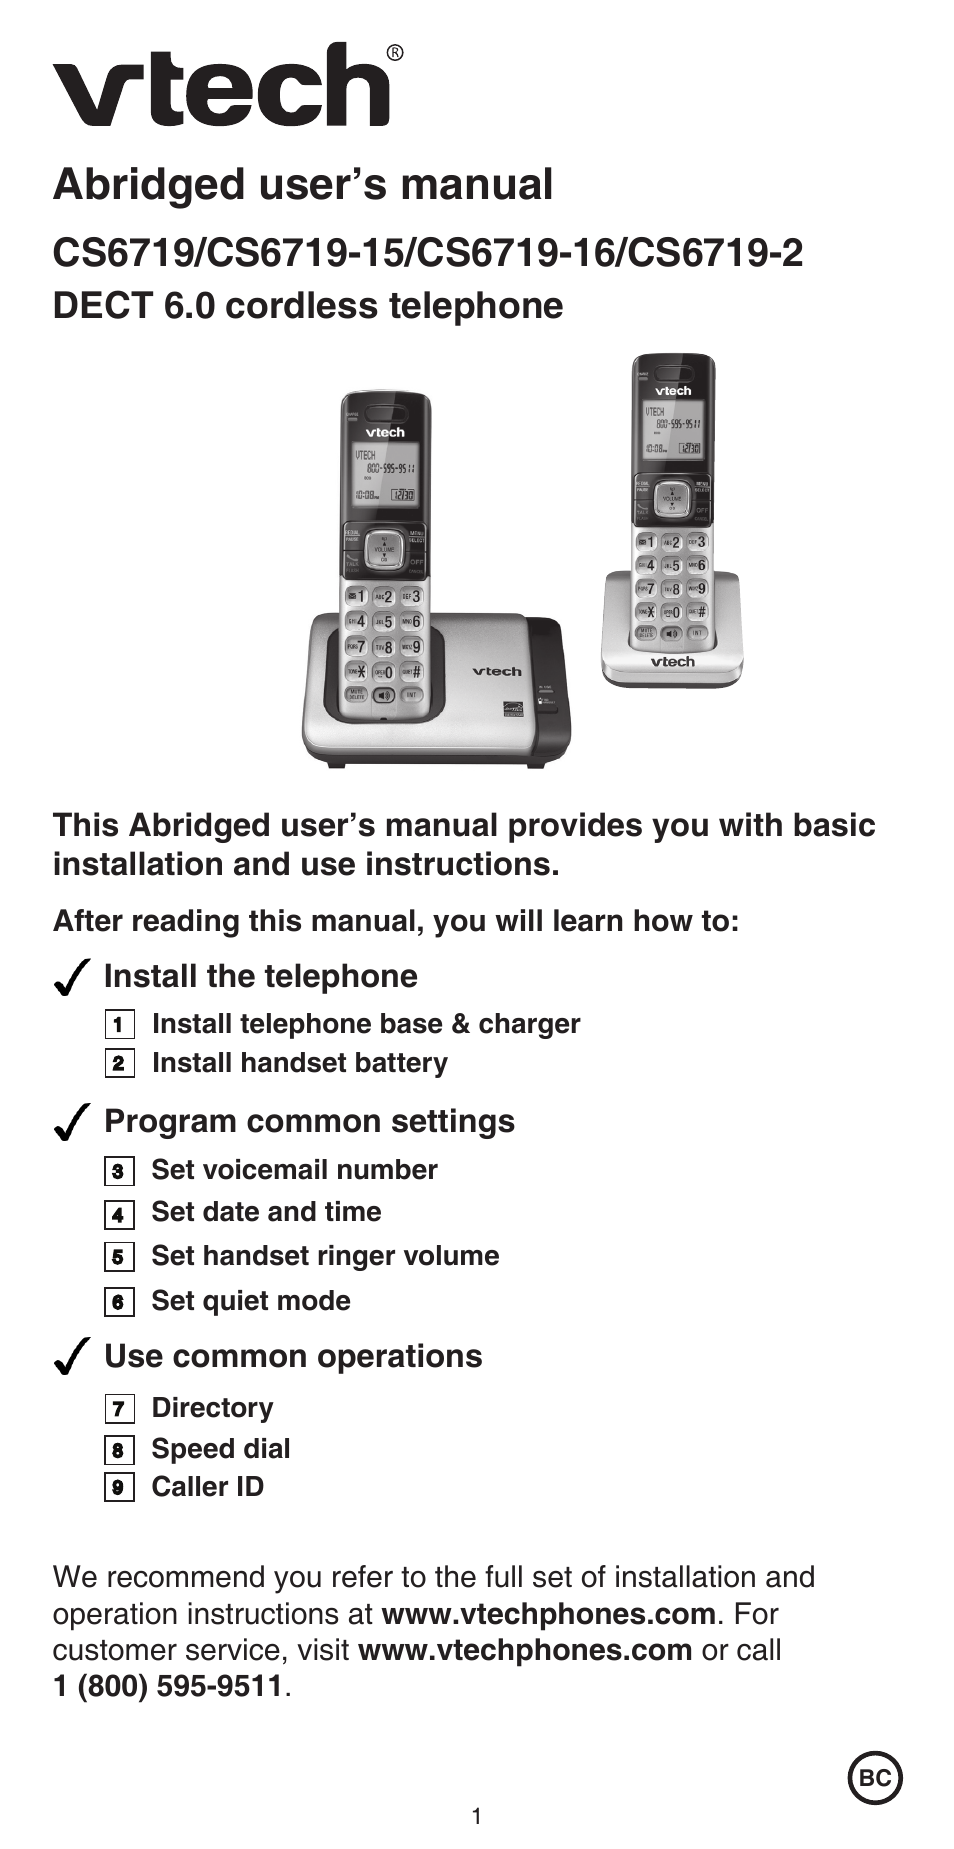 VTech CS6719-2 Abridged manual User Manual | 12 pages